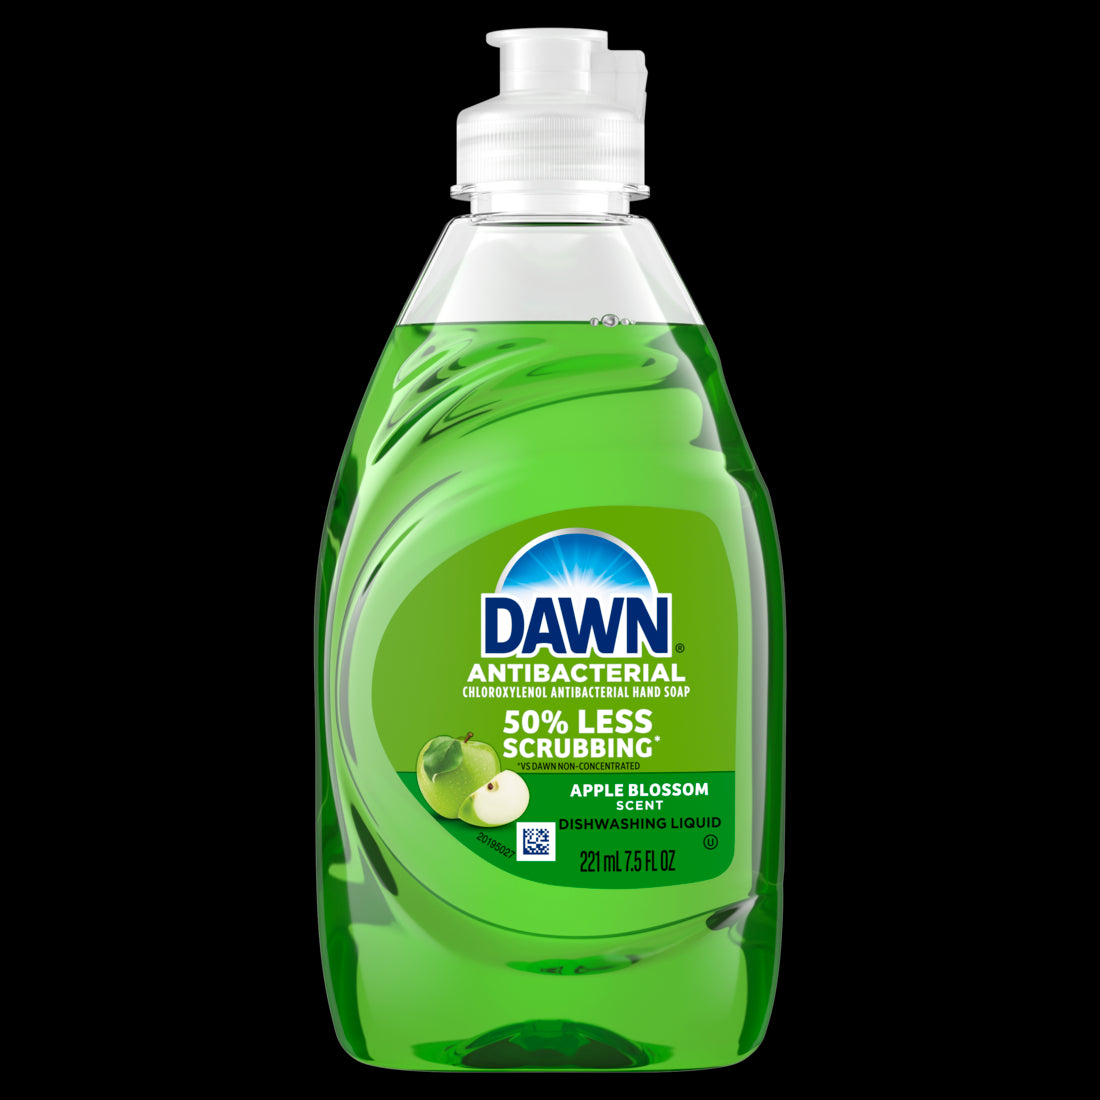 Dawn Ultra Anti-Bacterial Dish Soap in Apple Blossom - 7.5oz/12pk